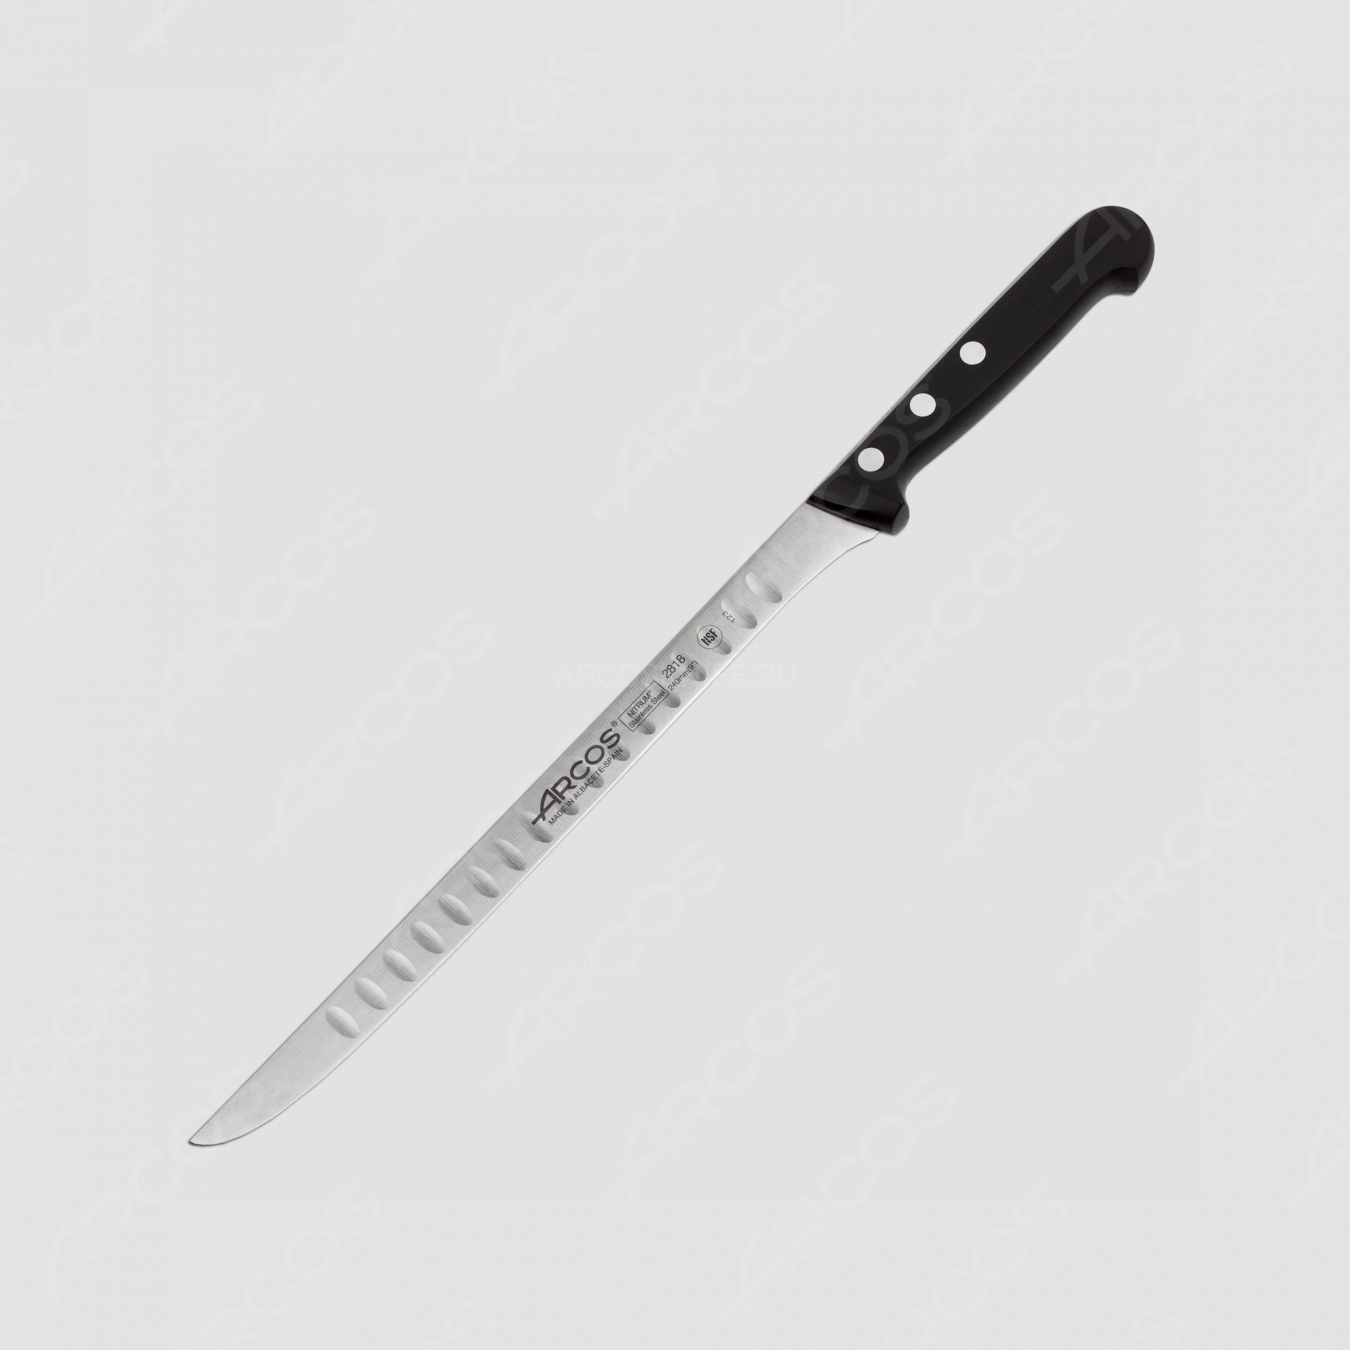 Нож кухонный для нарезки мяса 24 см, серия Universal, ARCOS, Испания